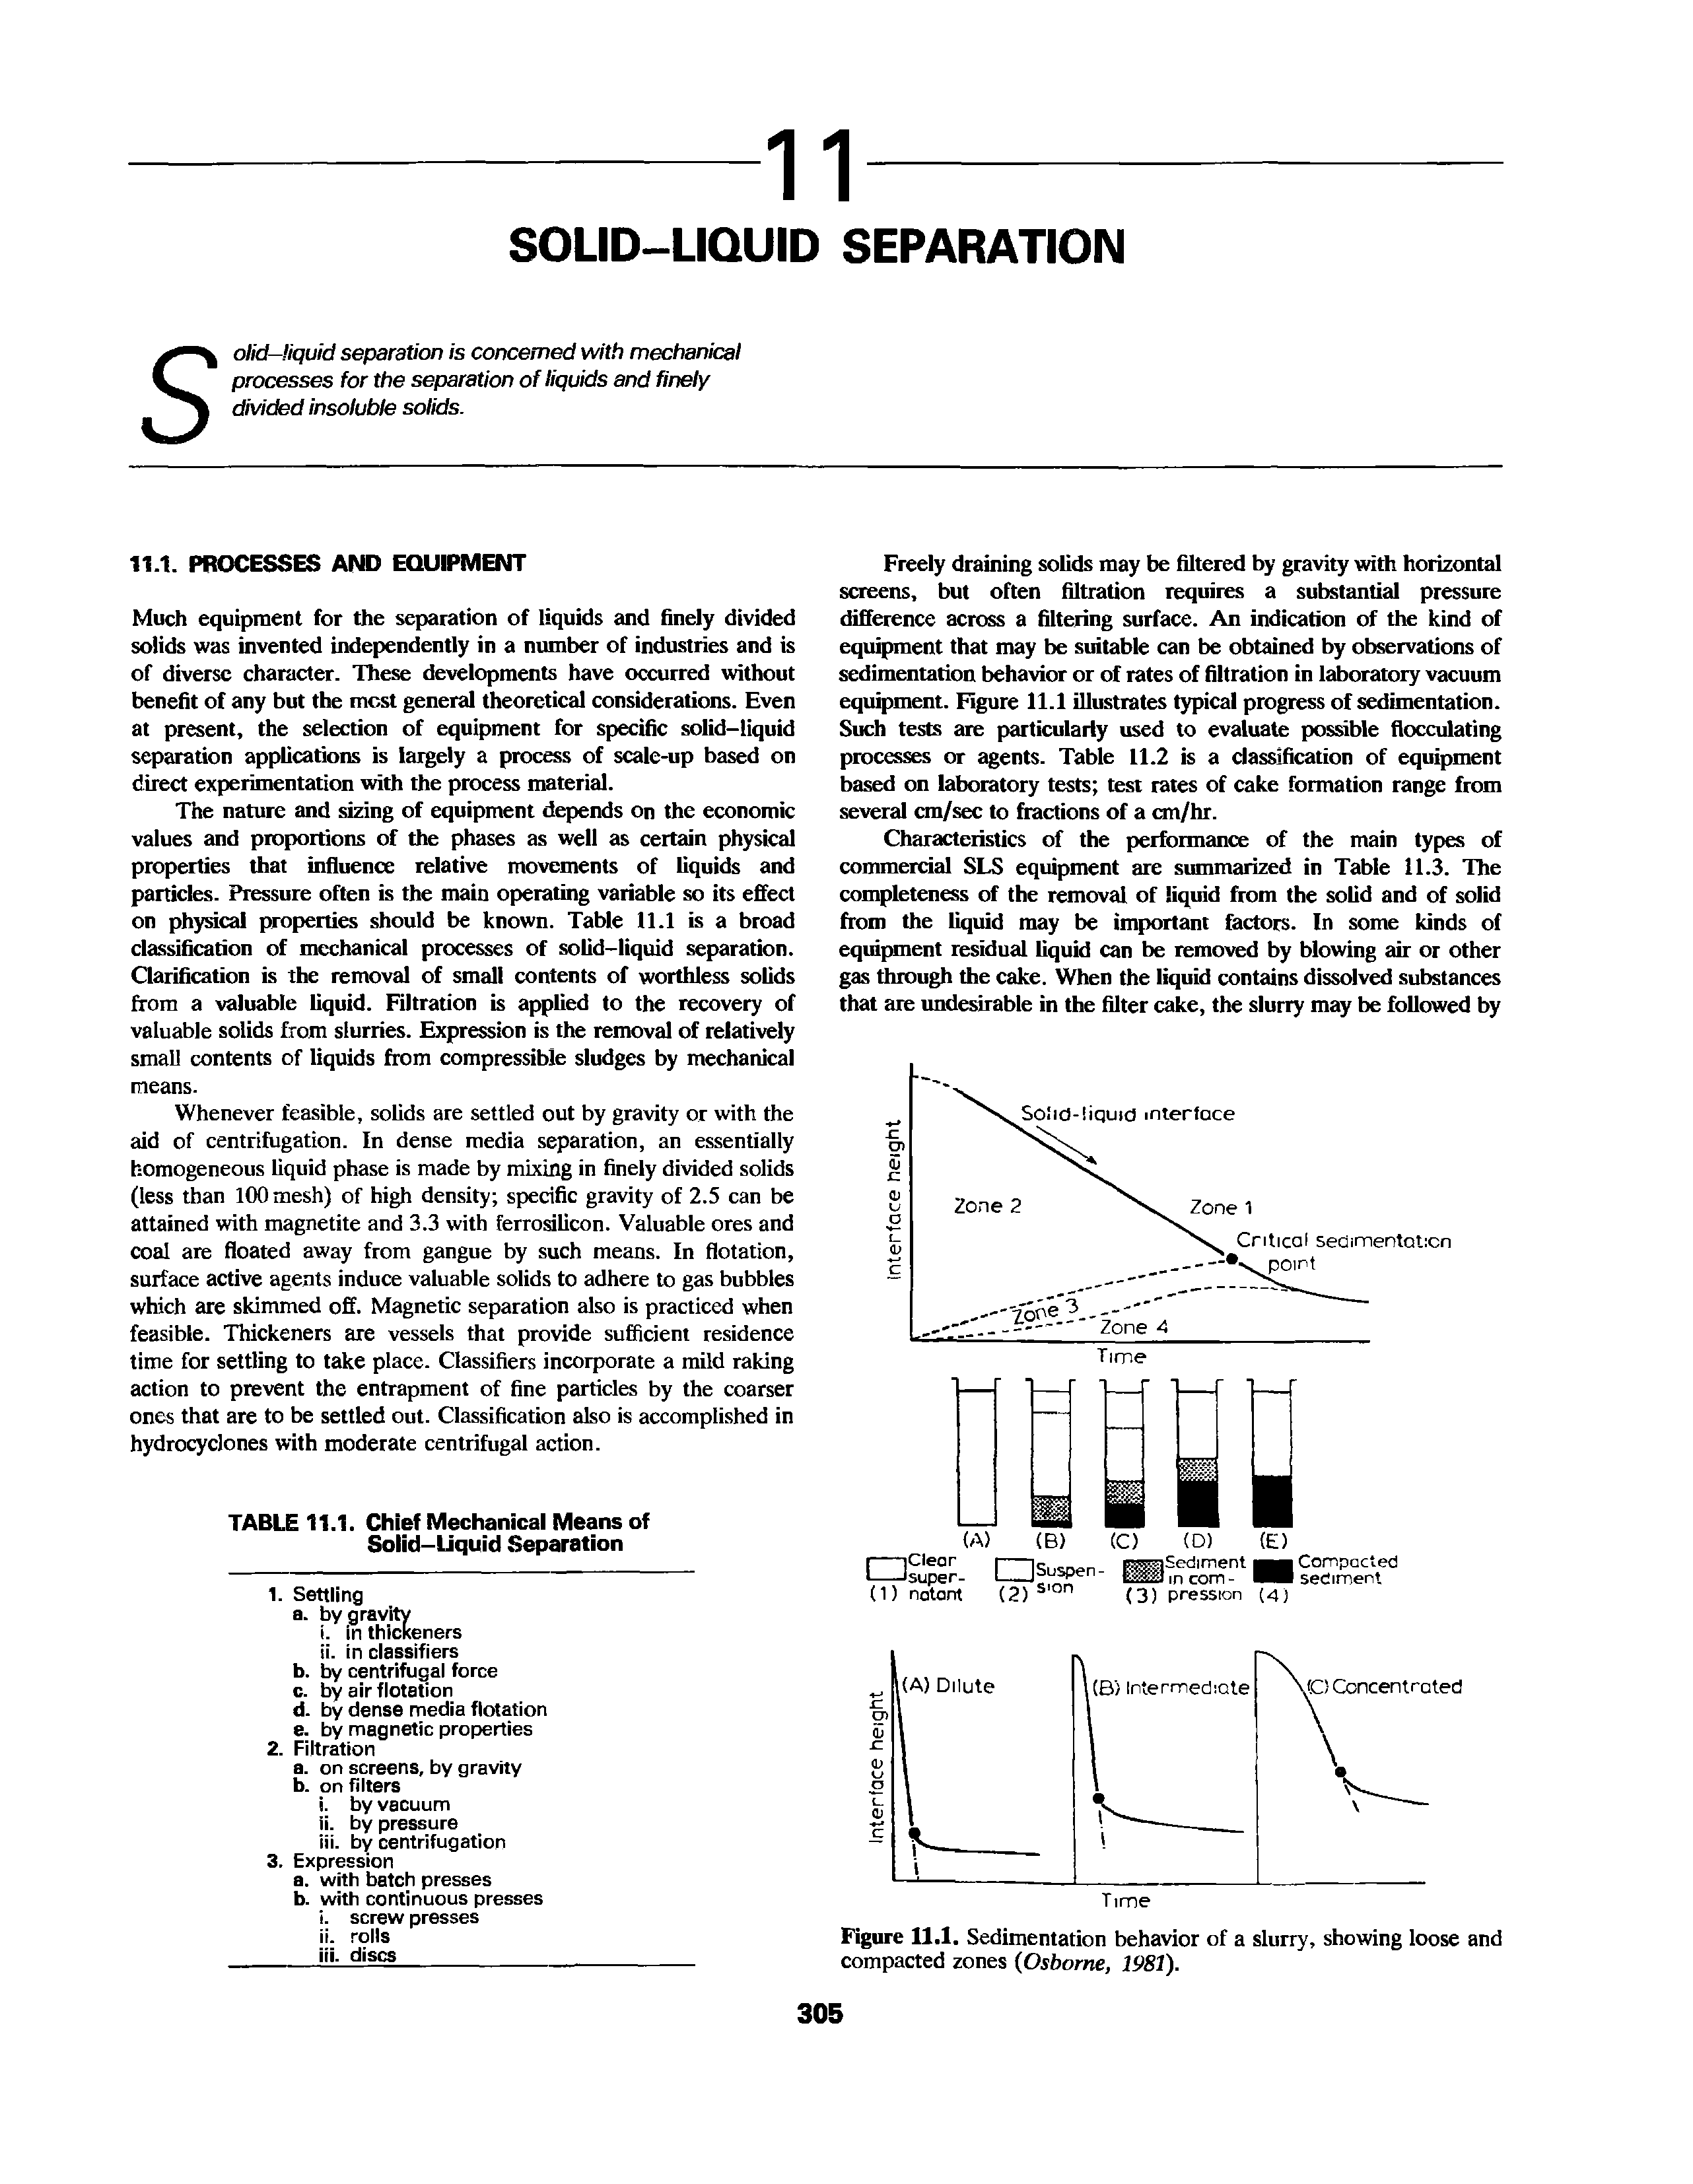 Figure 11.1. Sedimentation behavior of a slurry, showing loose and compacted zones (Osborne, 1981).